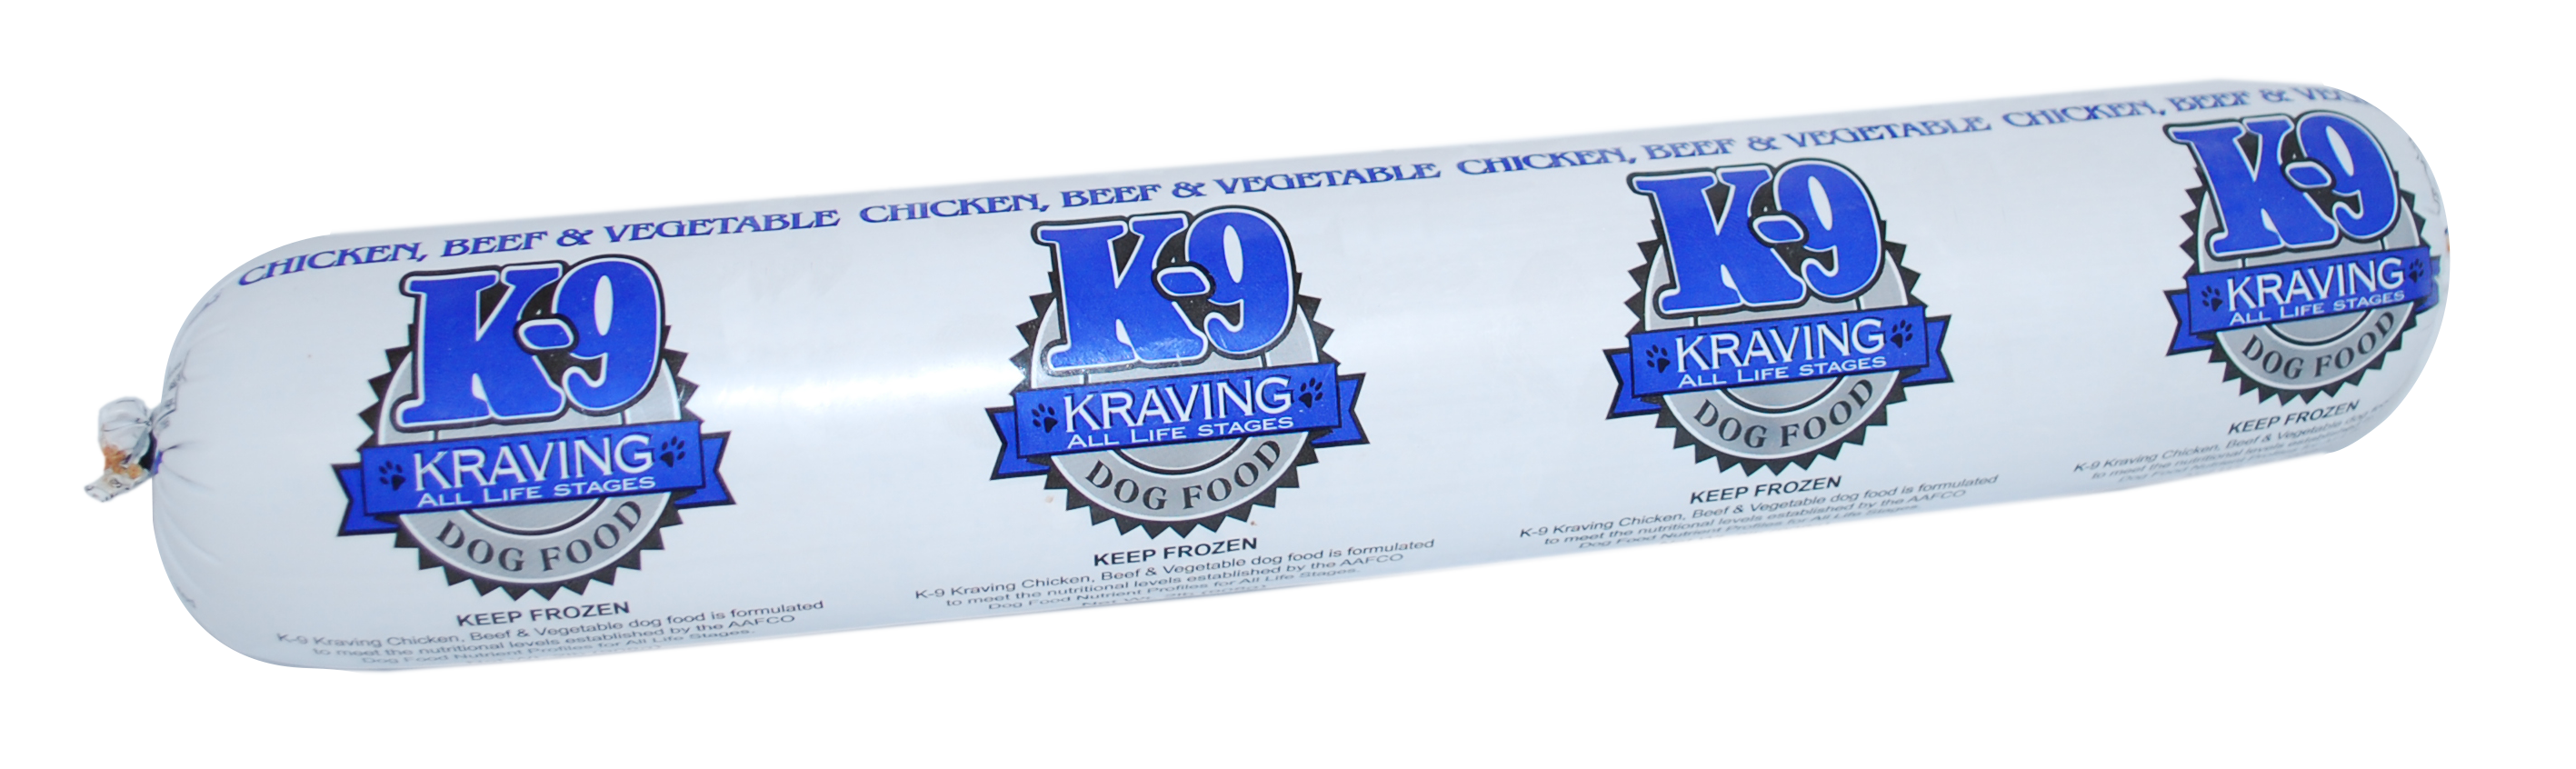 K-9 Kraving Chicken, Beef & Vegetable